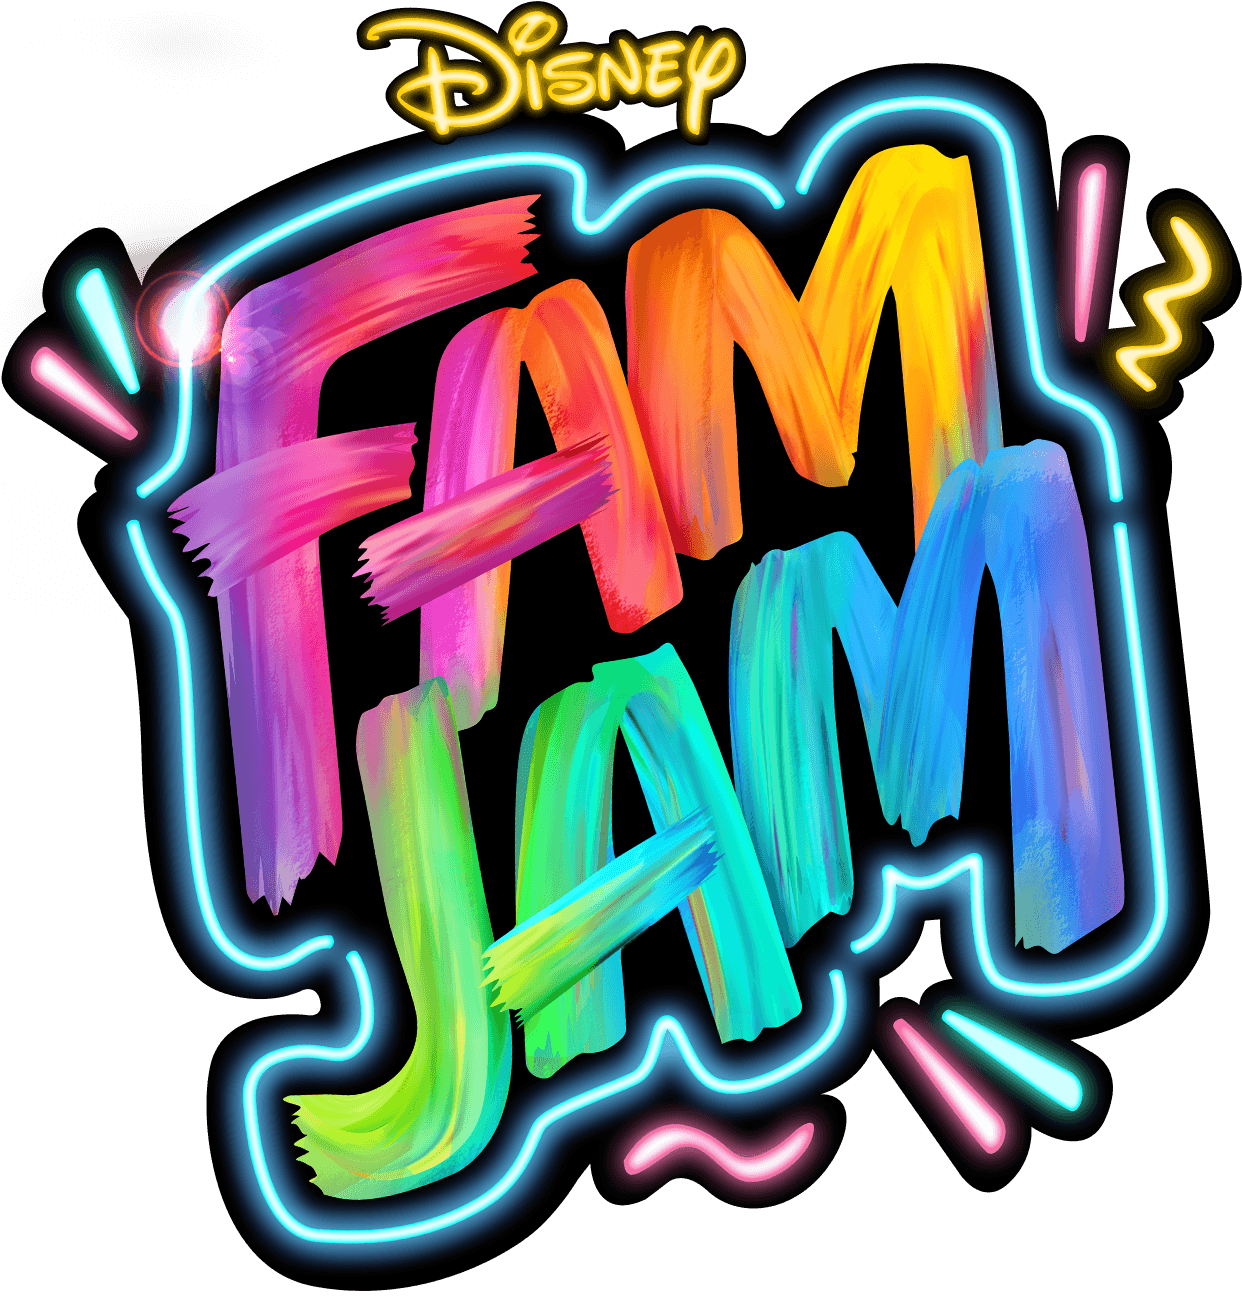 Disney Fam Jam logo